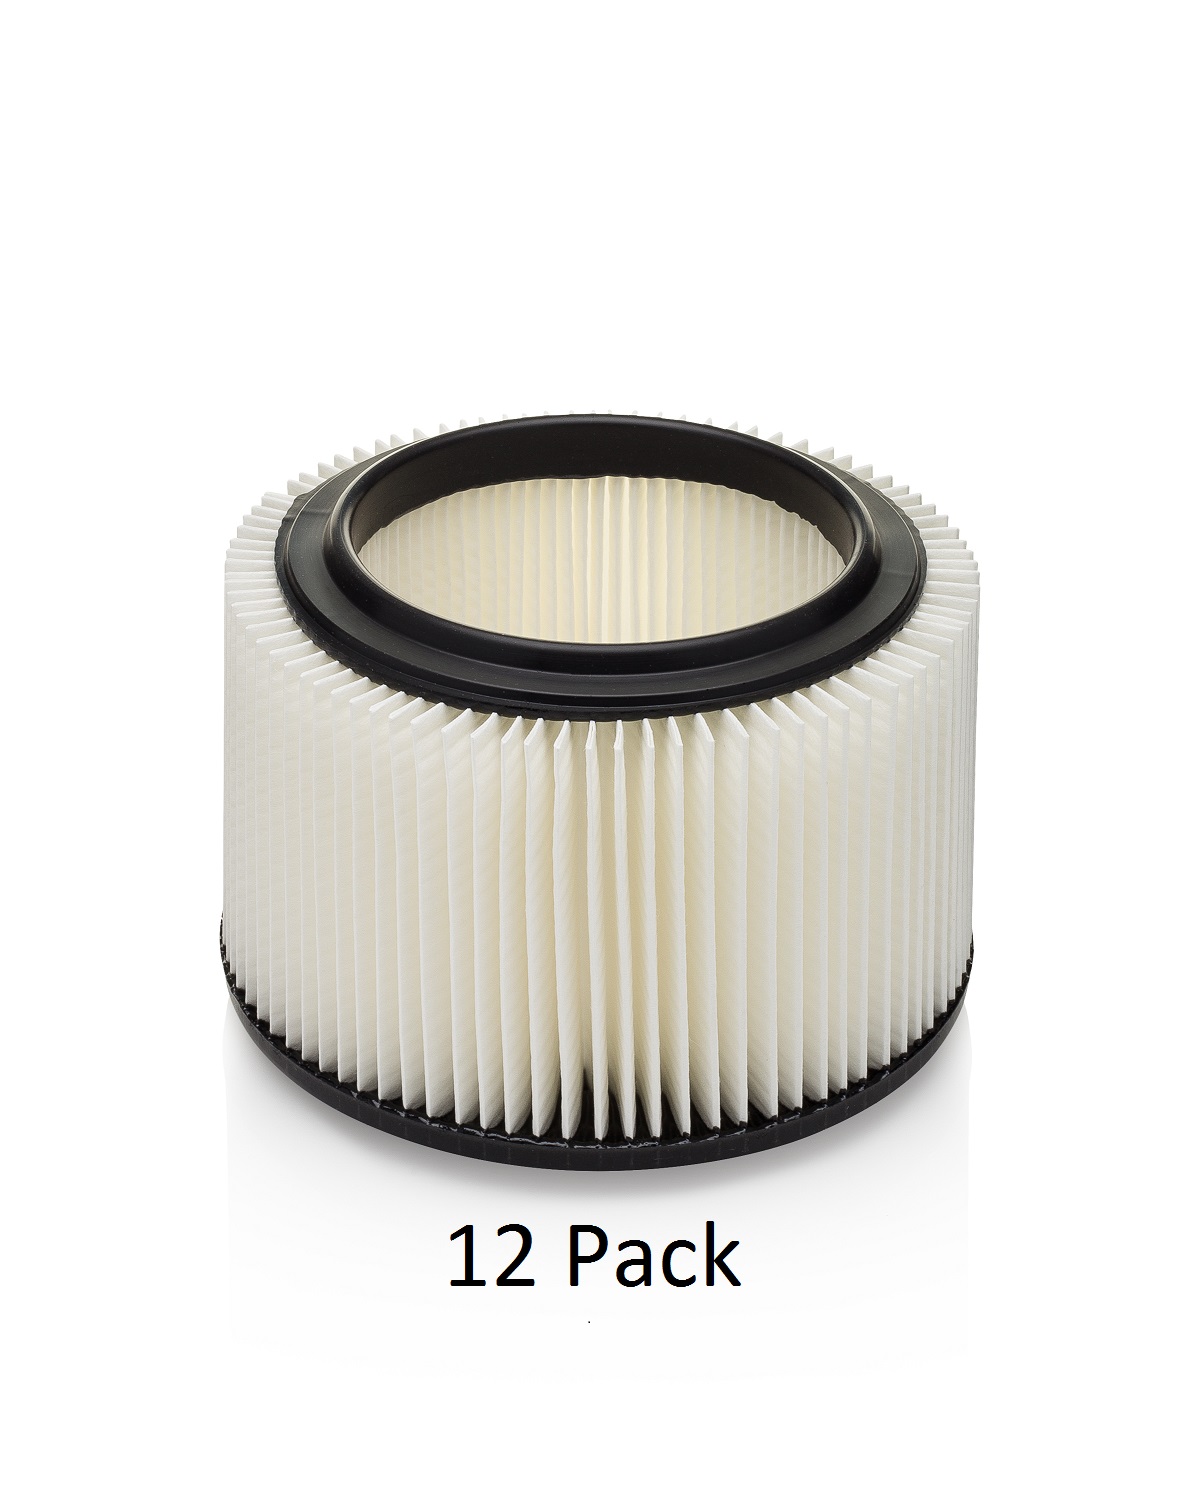 KoPach Filter Craftsman 3 & 4 gal. Replacement Filter 12 pack, Part # 17810